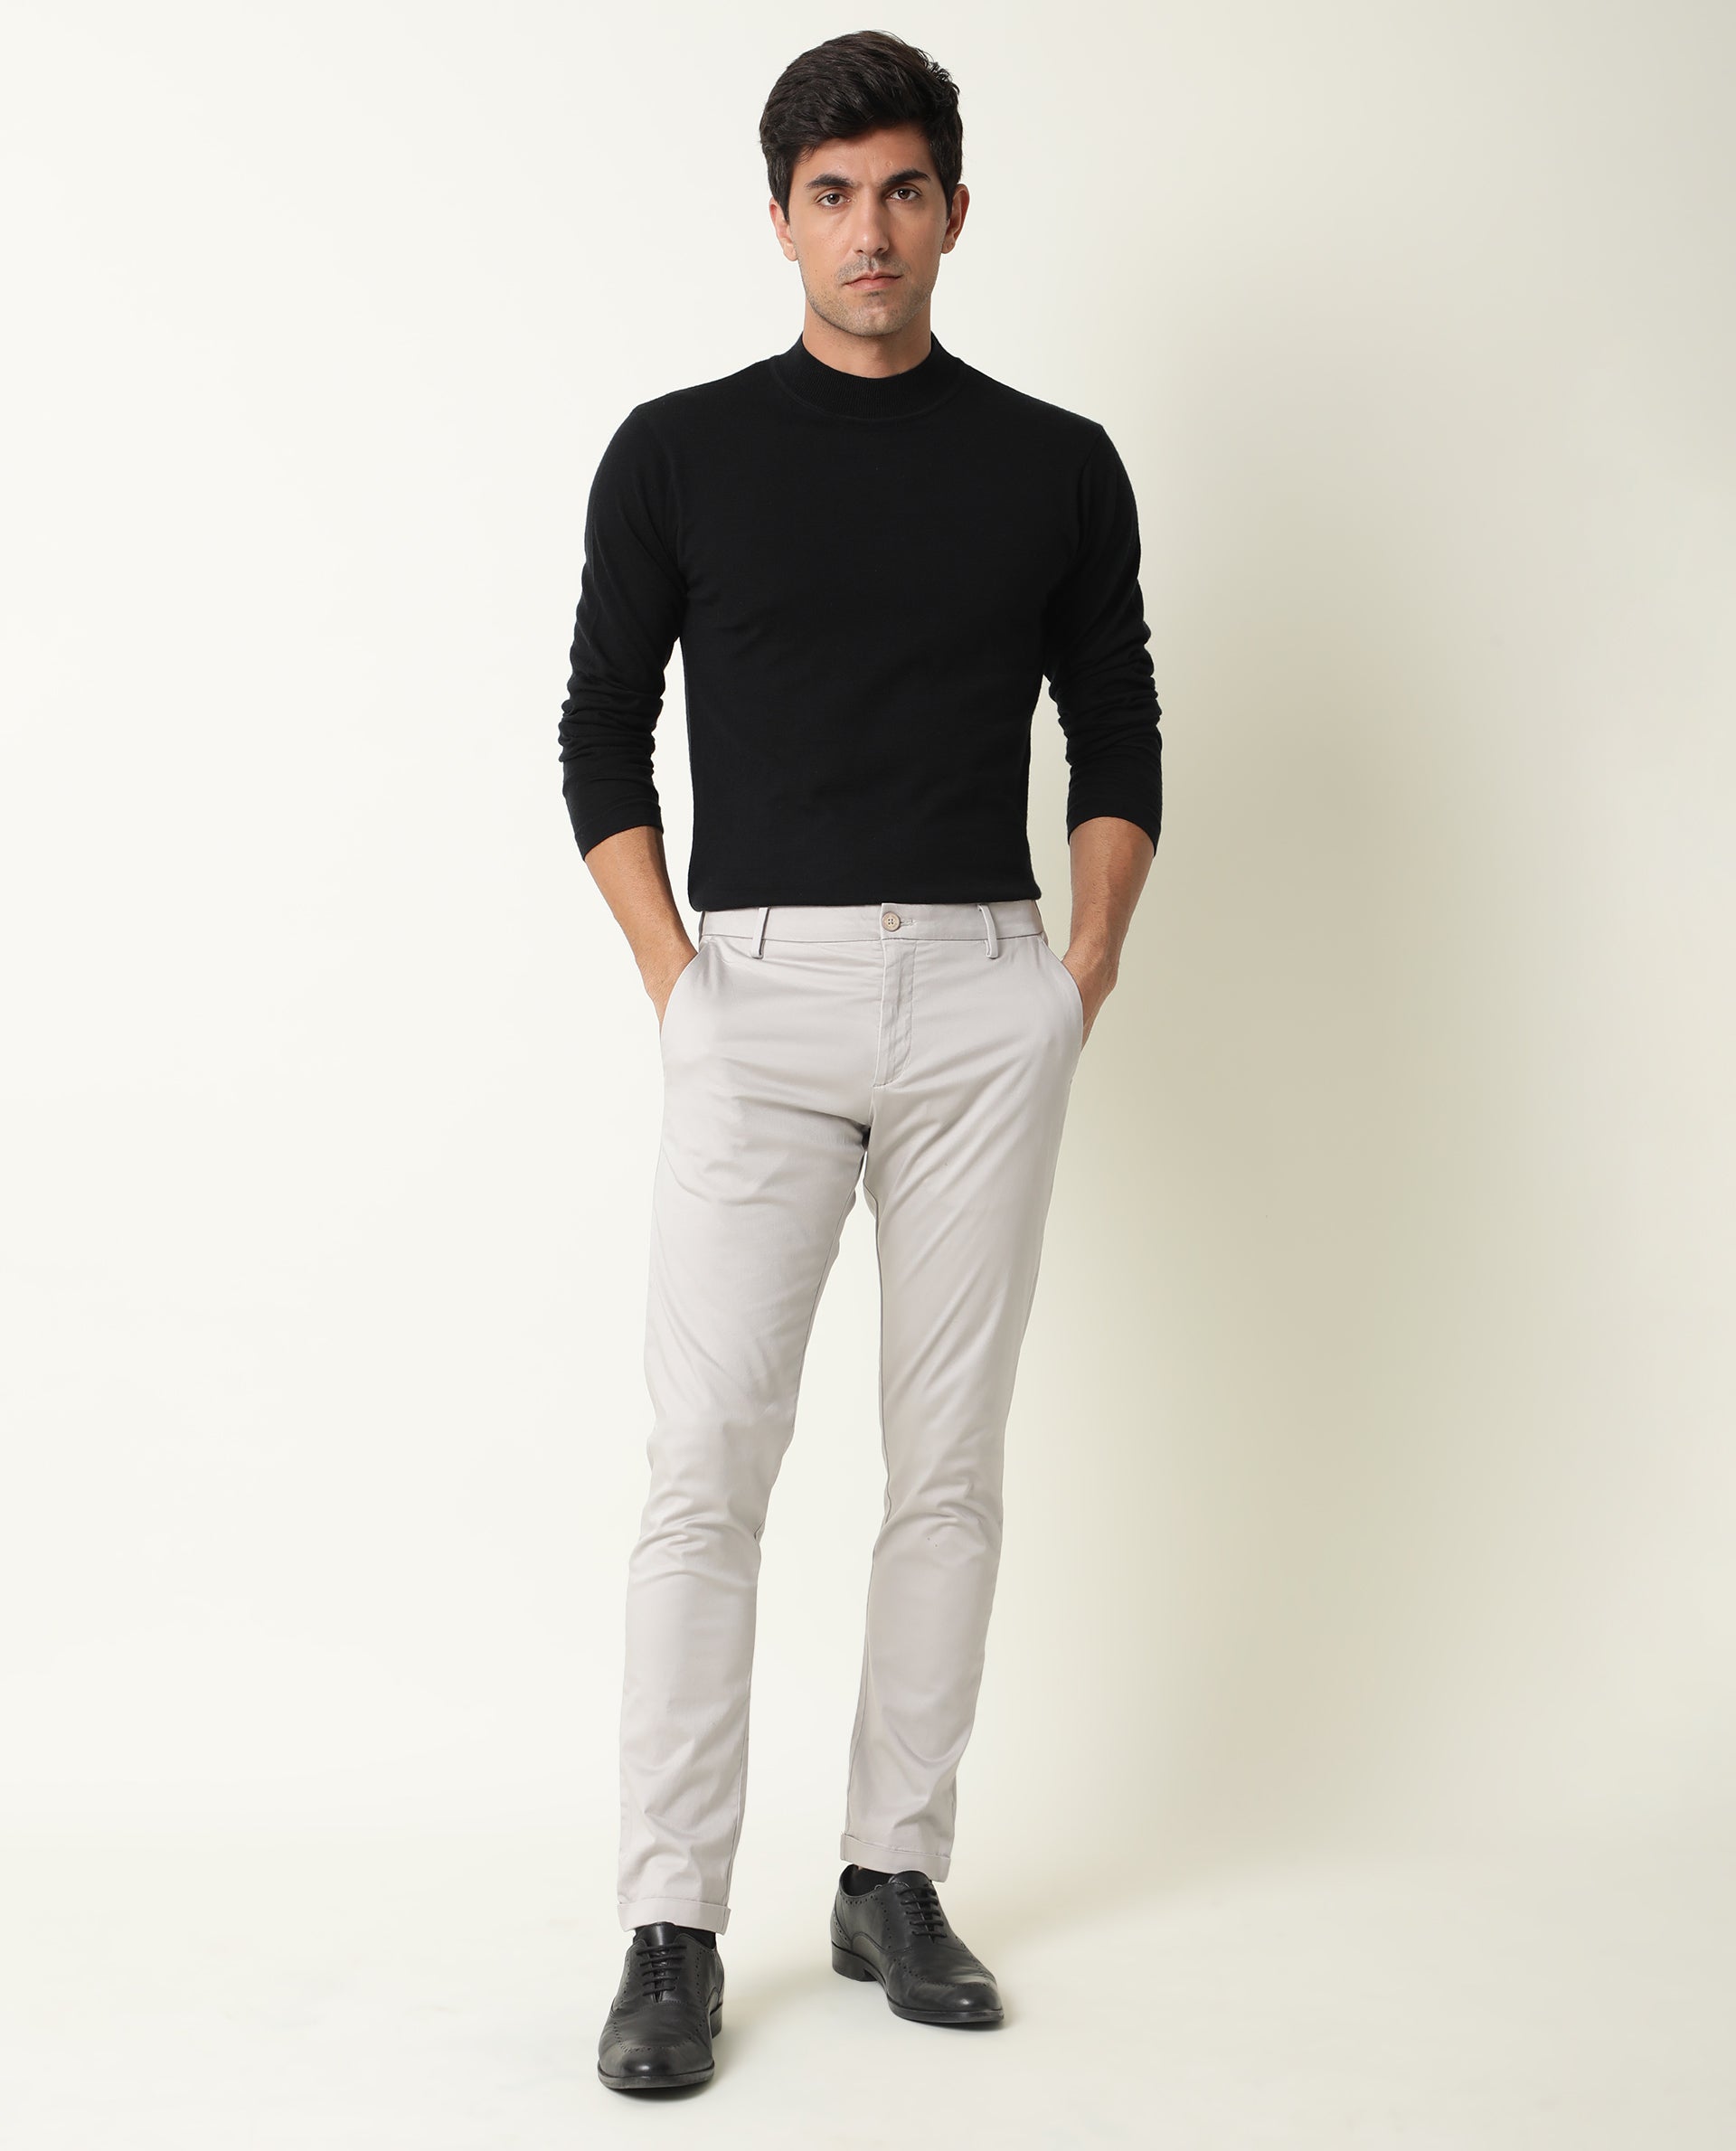 Buy Cotton Plus Mens Formal Flat Front TrouserPant Black34 at Amazonin